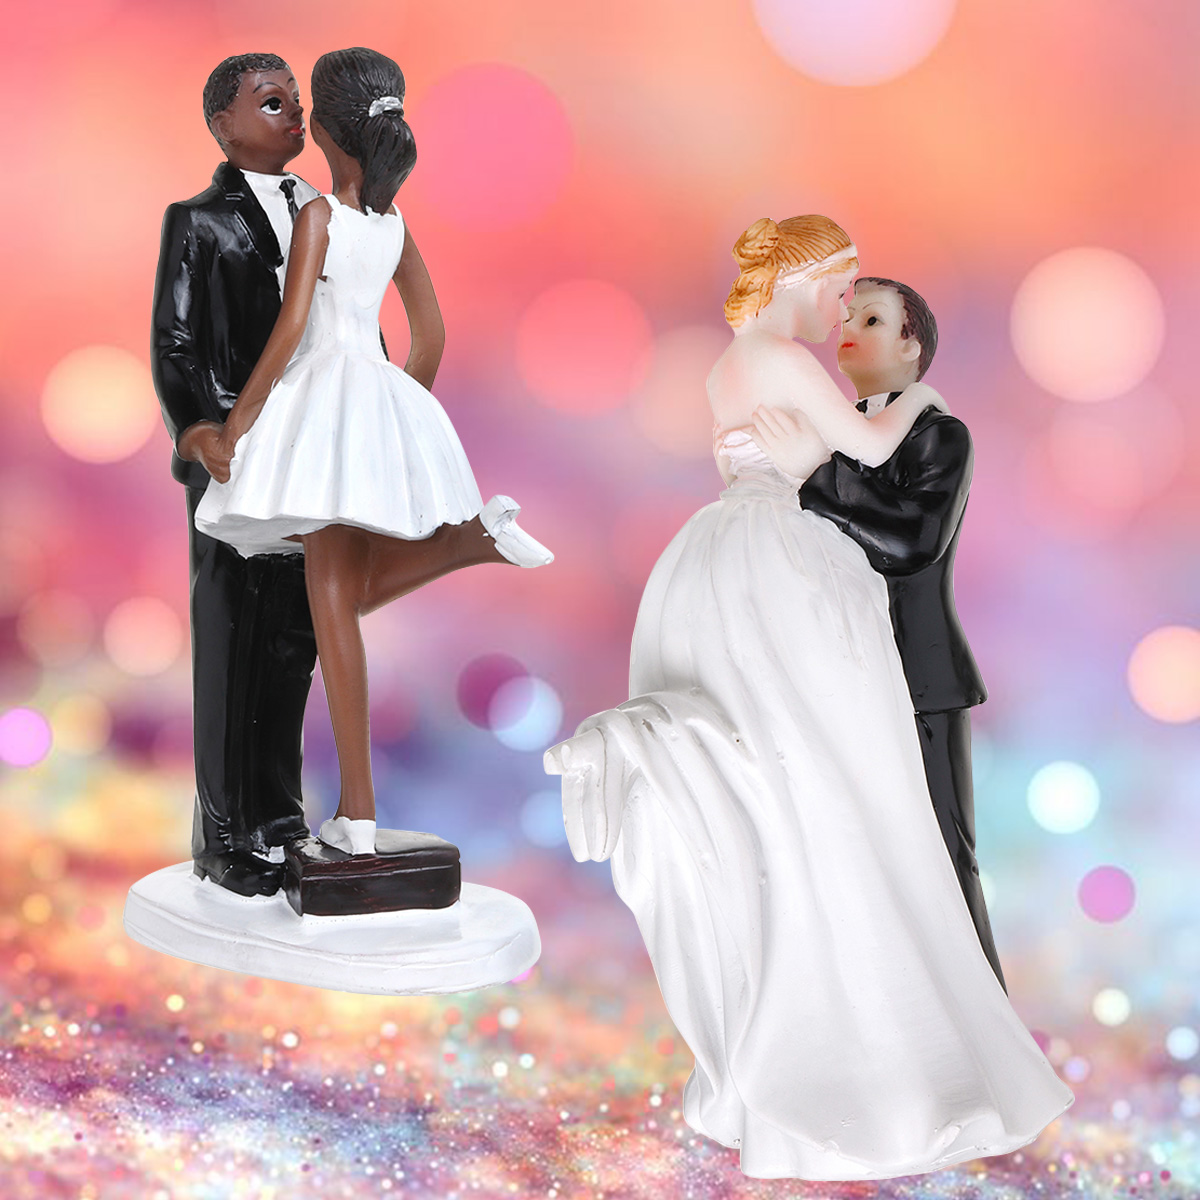 Romantic-Funny-Wedding-Cake-Topper-Figure-Bride-Groom-Couple-Bridal-Decorations-1421525-2